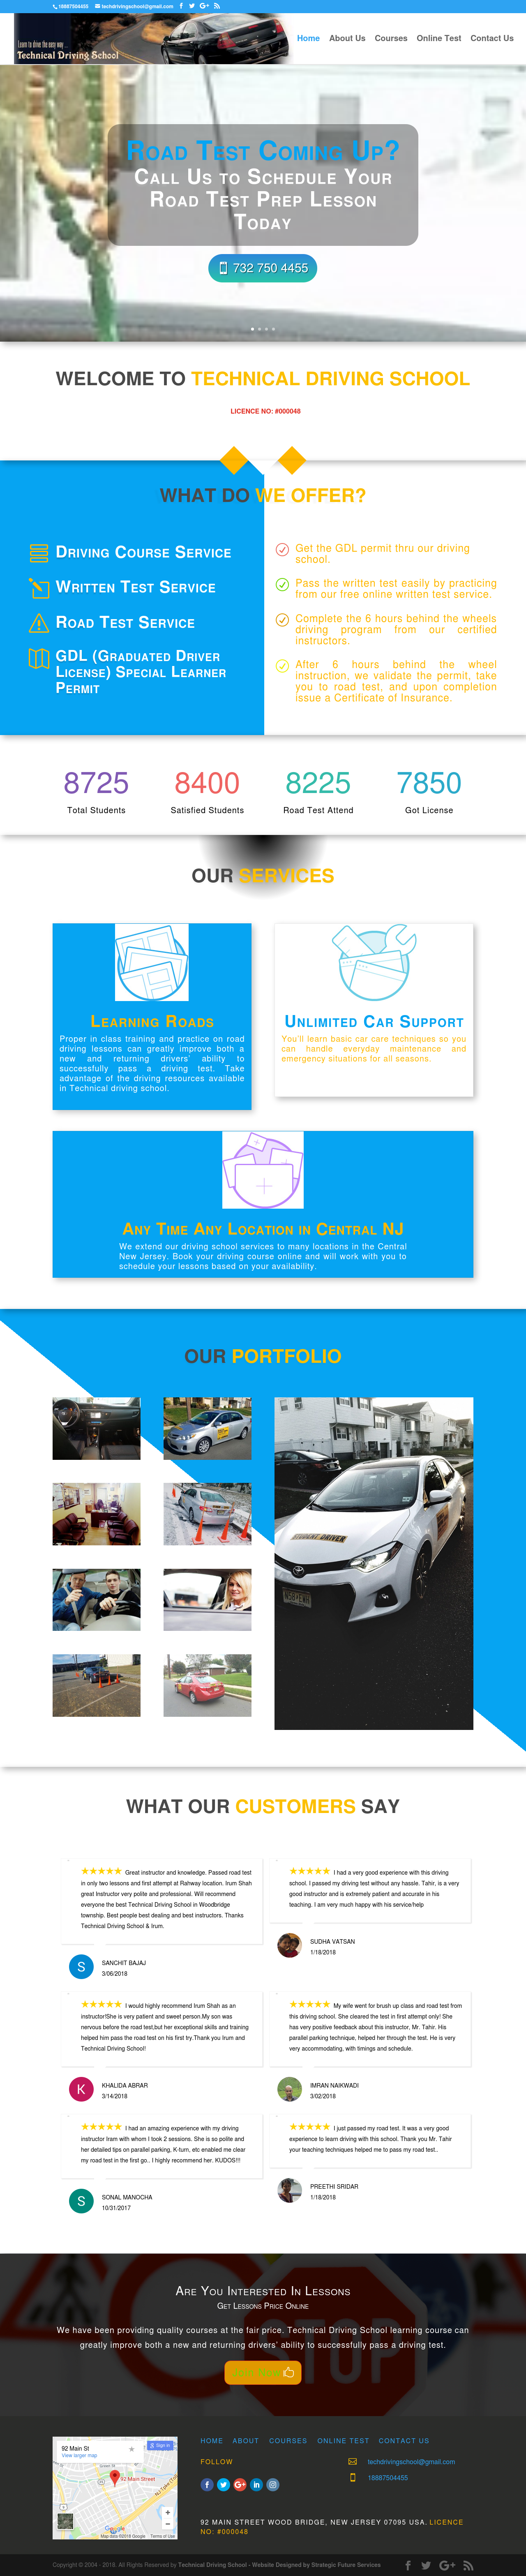 New Jersey USA based Technical Driving School Website Design in WordPress by Web Gen World